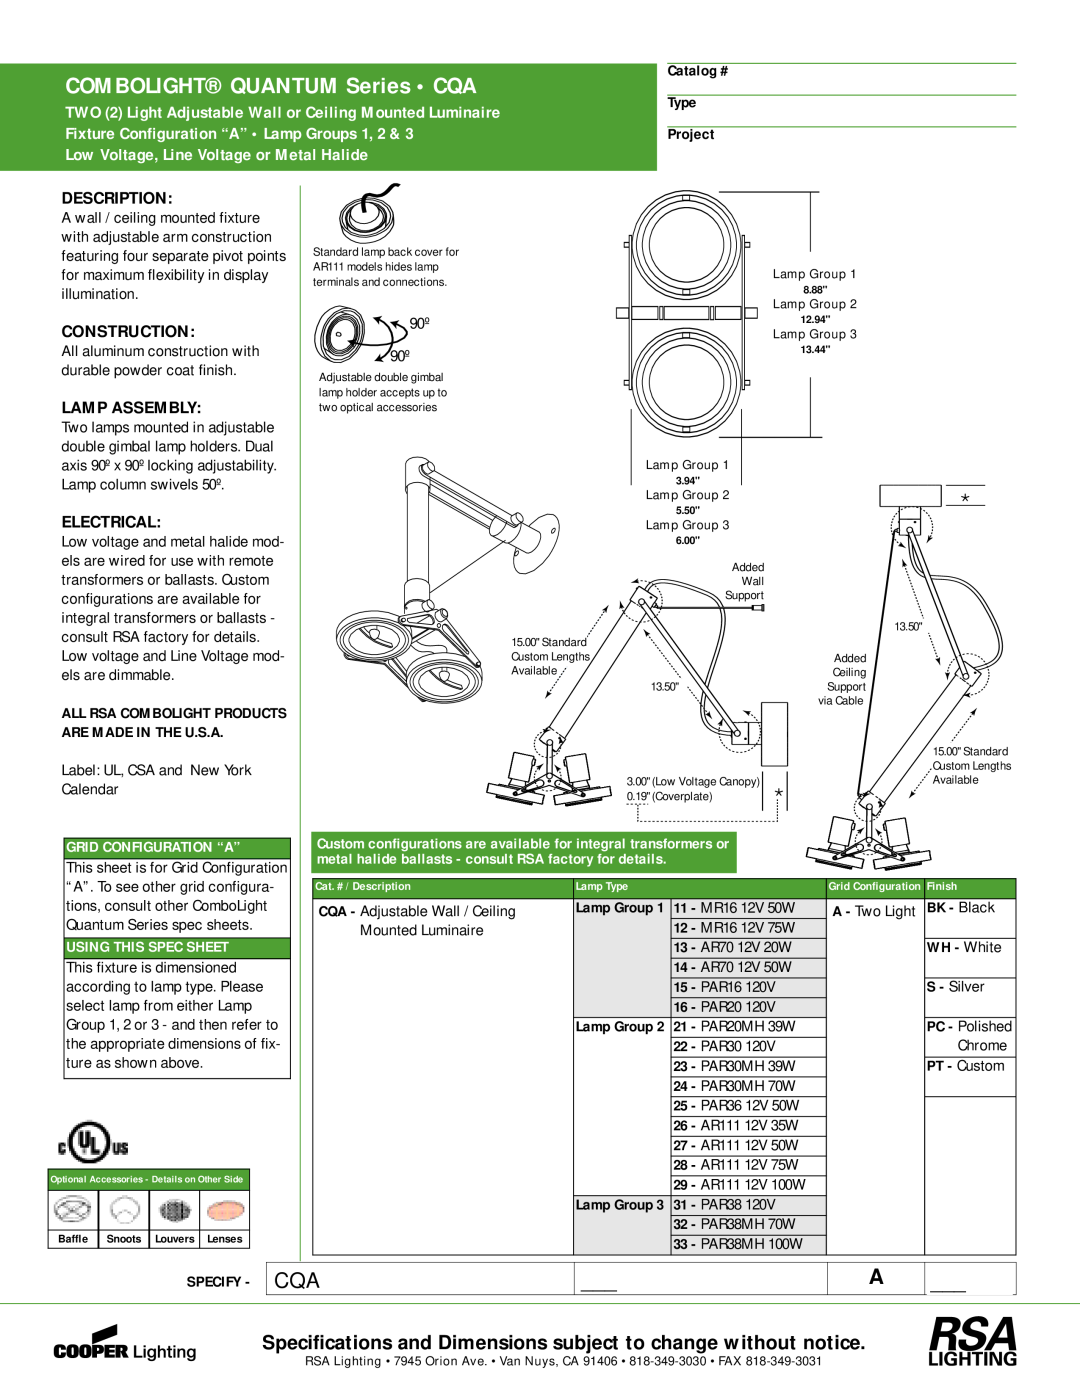 Cooper Lighting specifications COMBOLIGHT QUANTUM Series • CQA, Low Voltage, Line Voltage or Metal Halide, Description 